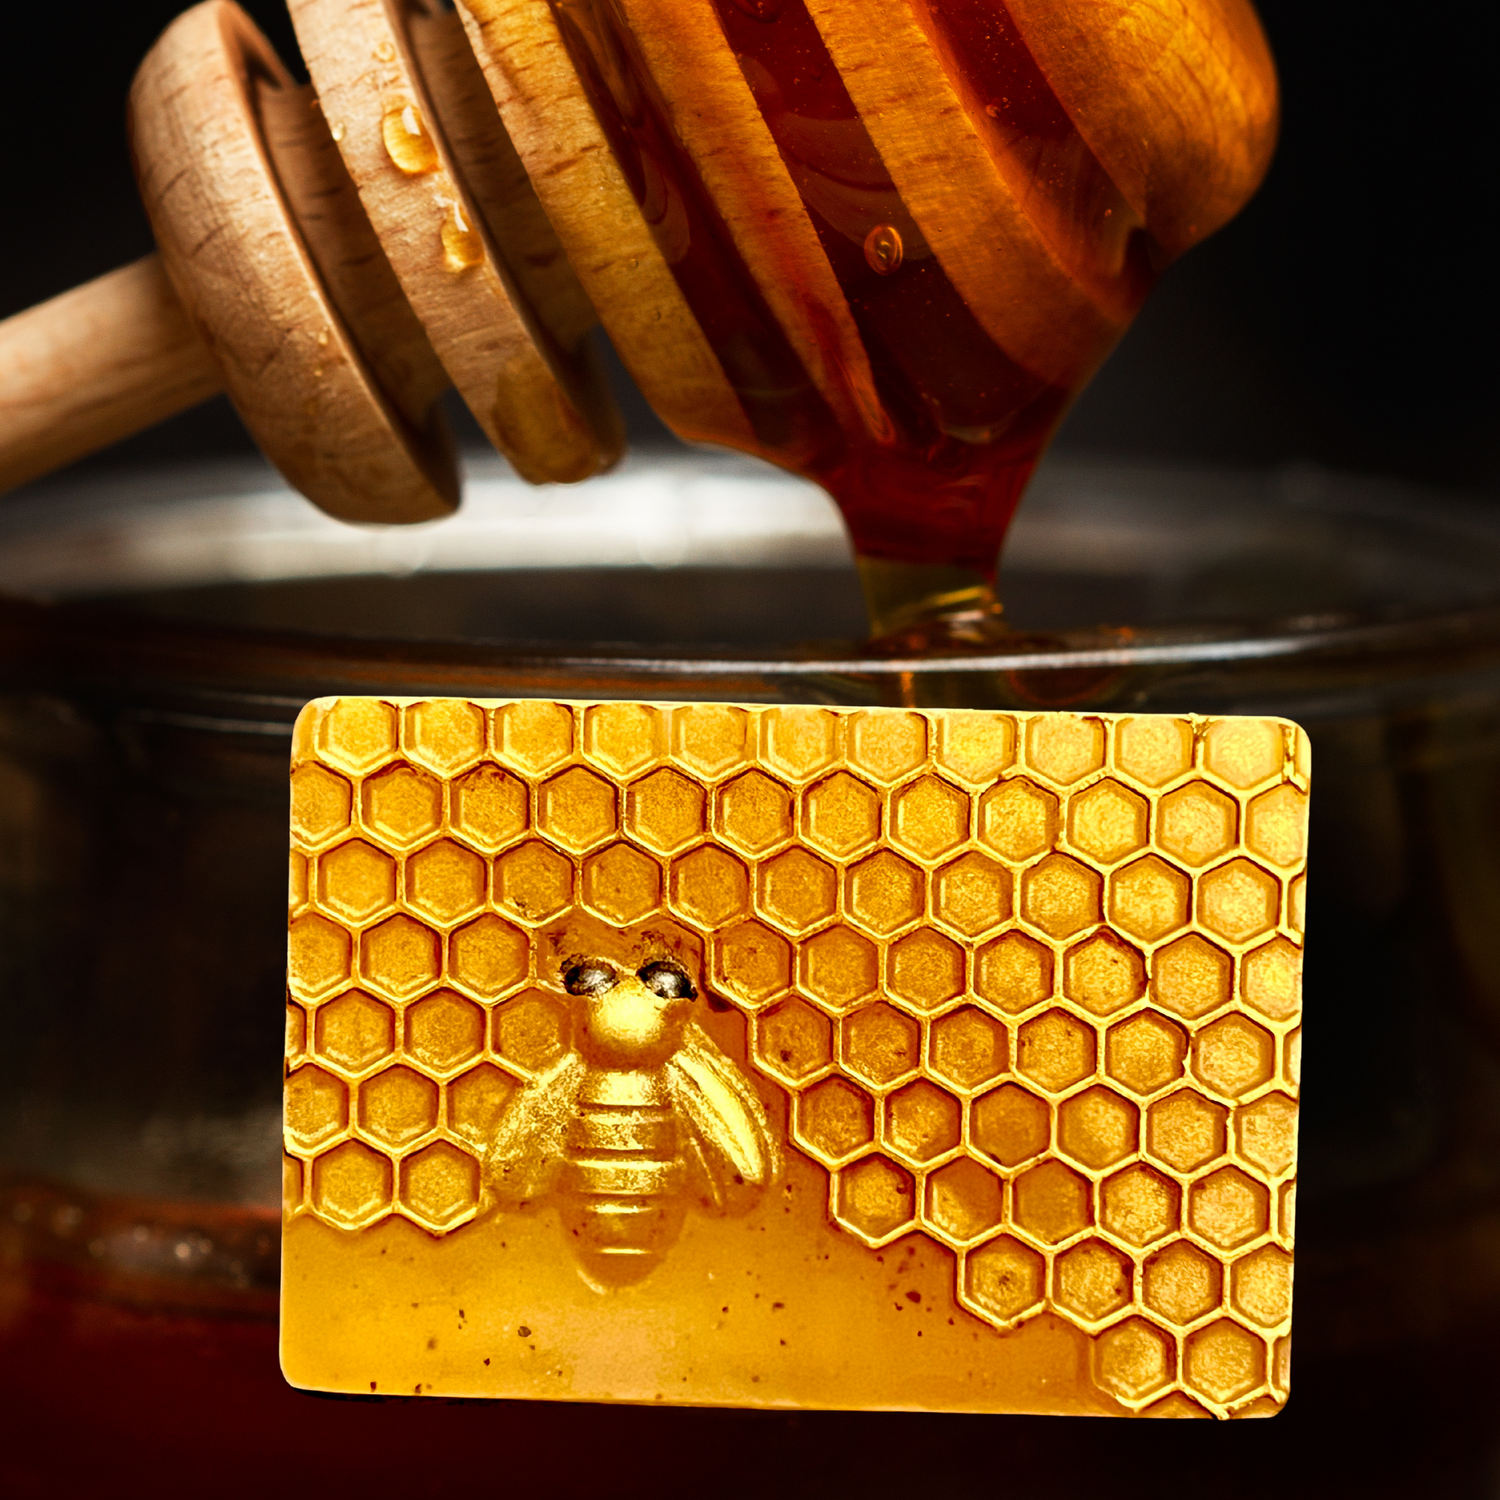 Alchemy7 | Apian Rectangle Soap - Honey Vanilla - Honey Oatmeal Shea Butter Soap